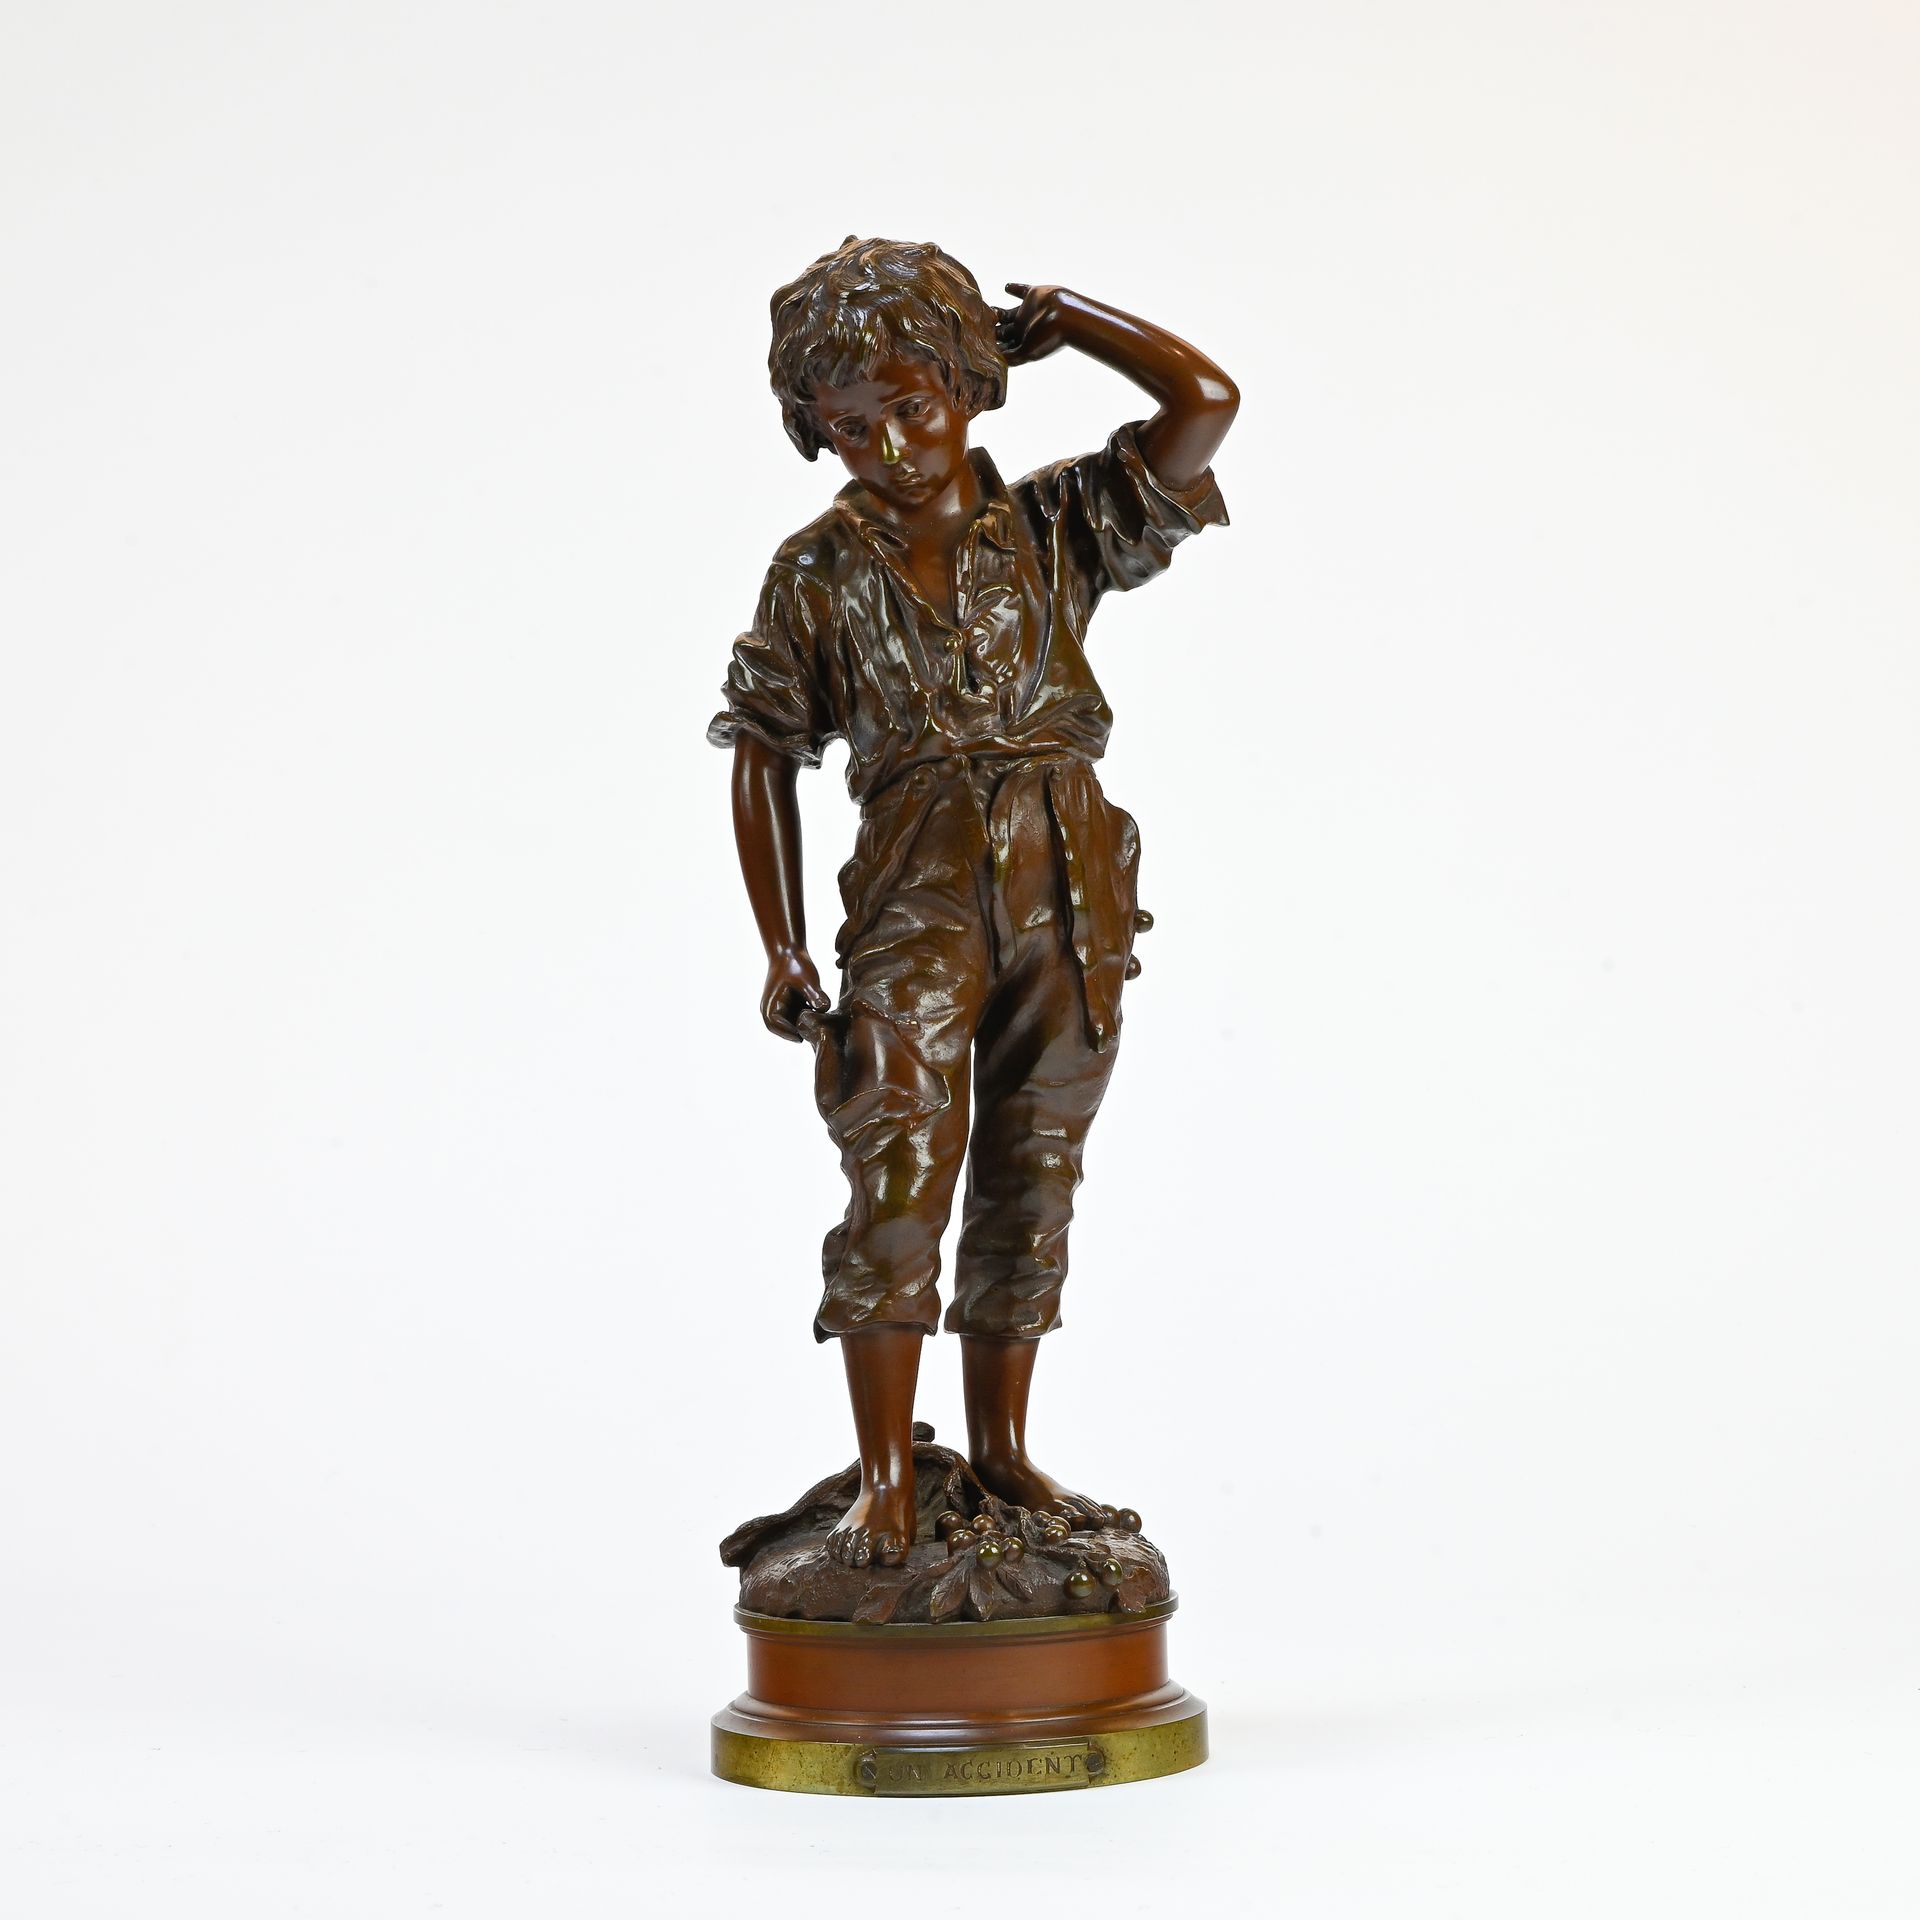 CHARLES ANFRIE (1833 - 1905) 查尔斯-安弗里 (1833 - 1905)

一次意外



棕色铜质雕塑，平台上有签名，铜质底座

&hellip;